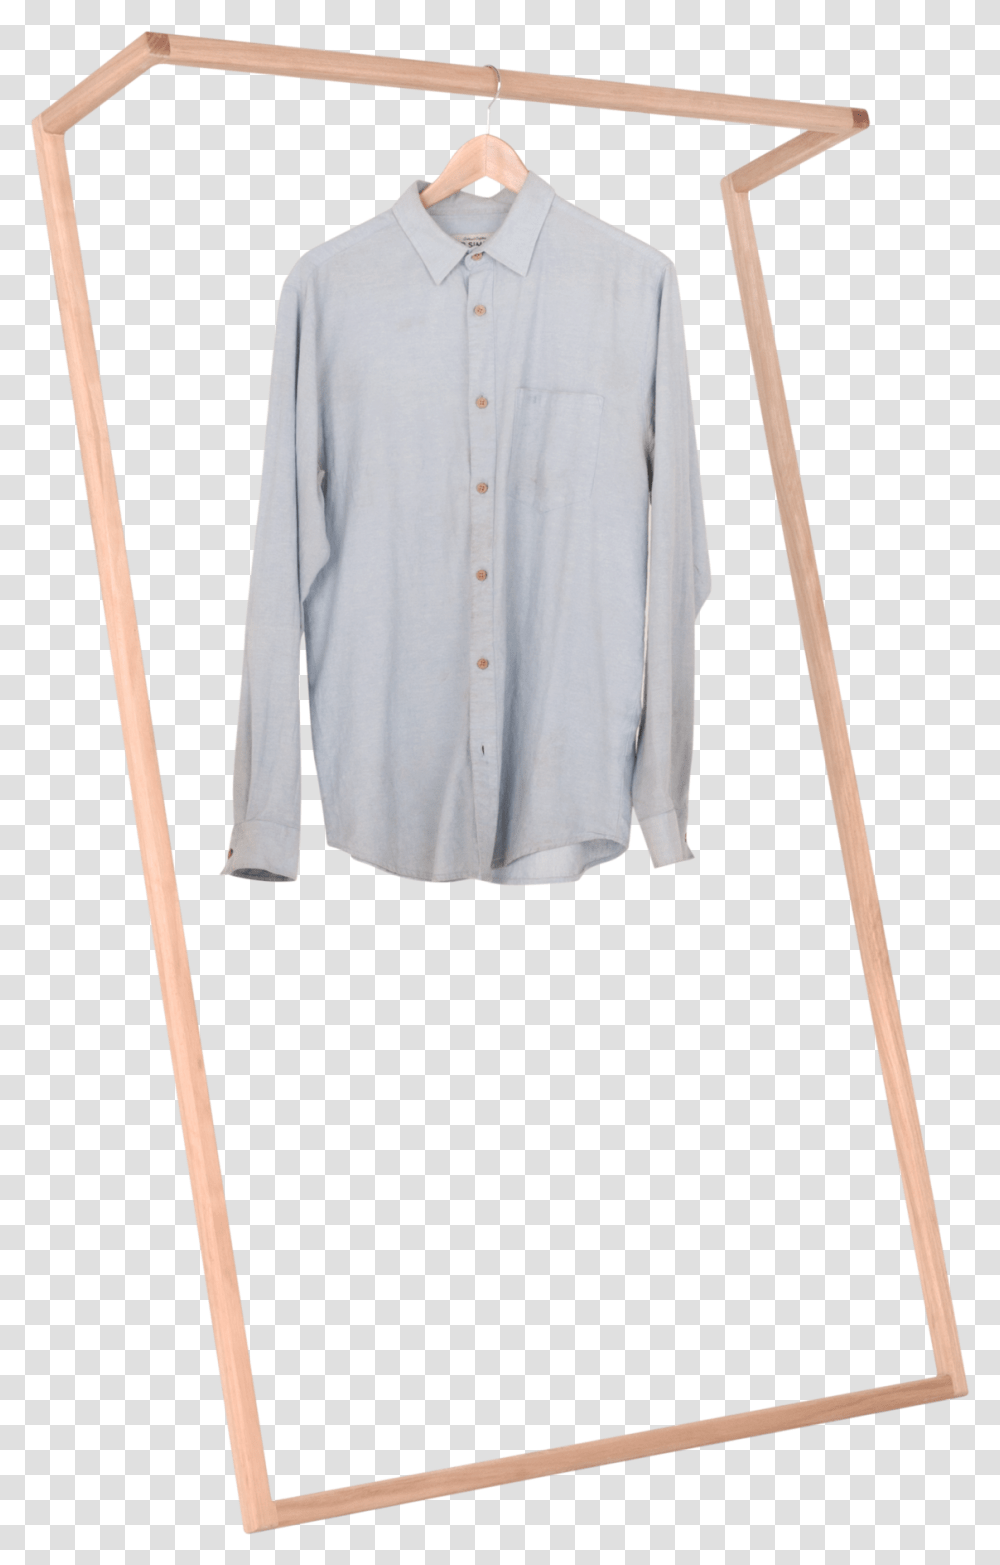 Clothing Rack, Stick, Cane, Apparel, Shirt Transparent Png